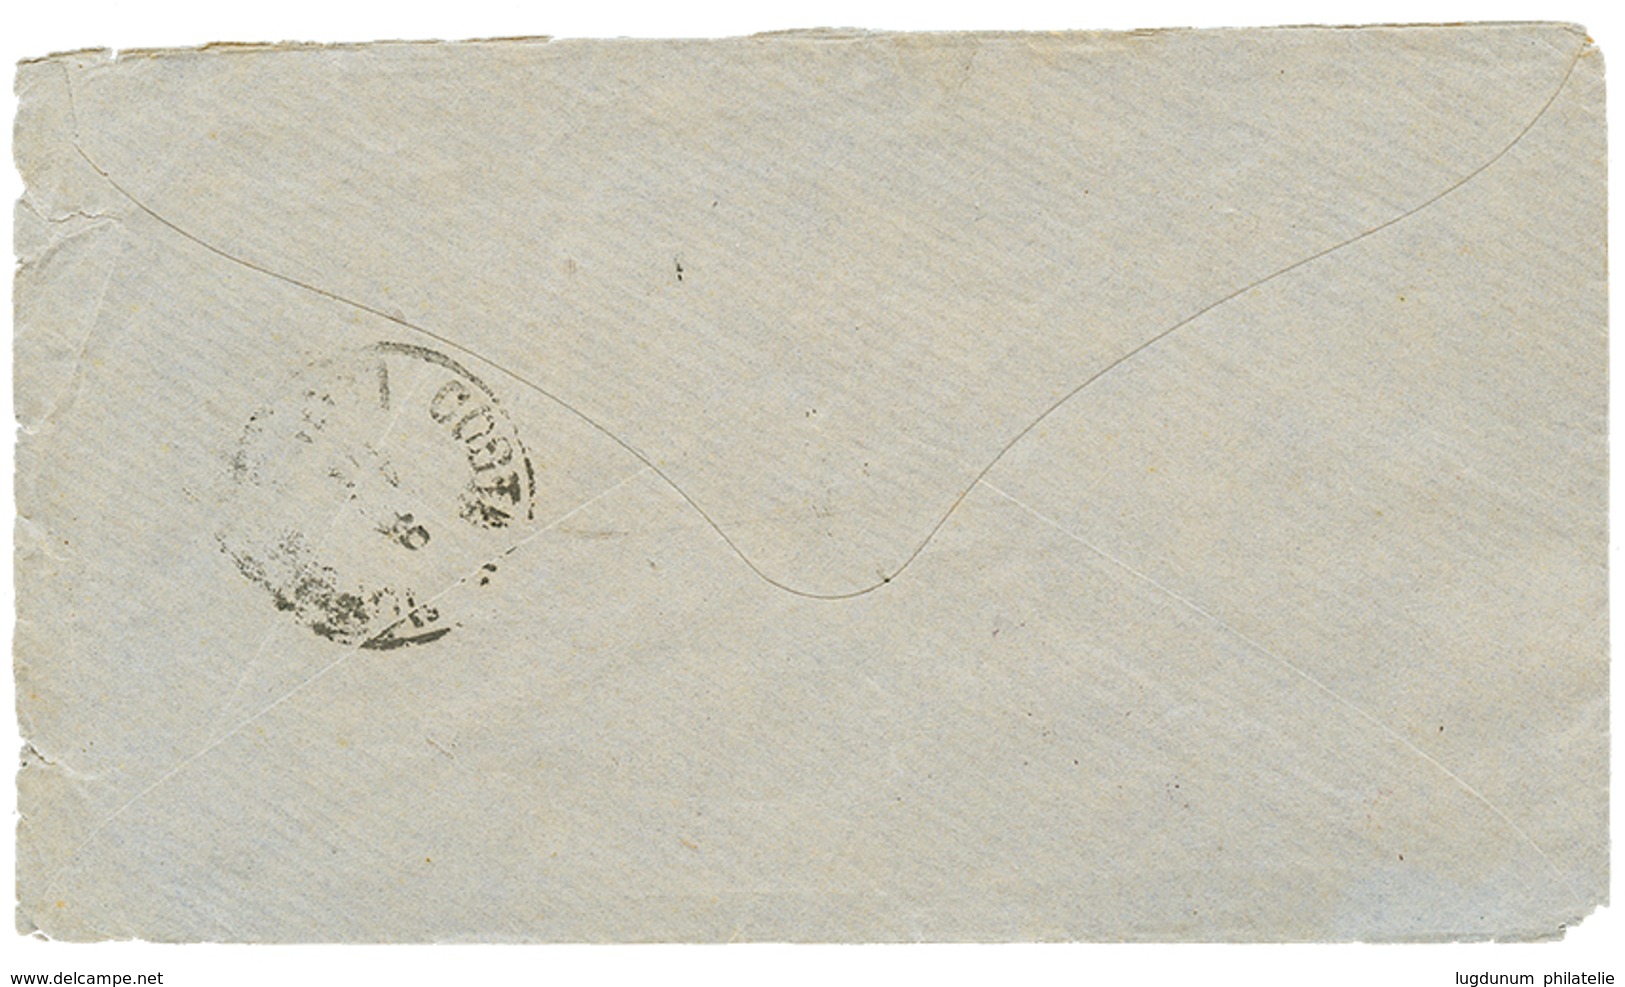 "CANEA" : 1881 5 SOLDI(x2) Canc. CANEA On Envelope To CONSTANTINOPLE. Superb. - Oostenrijkse Levant